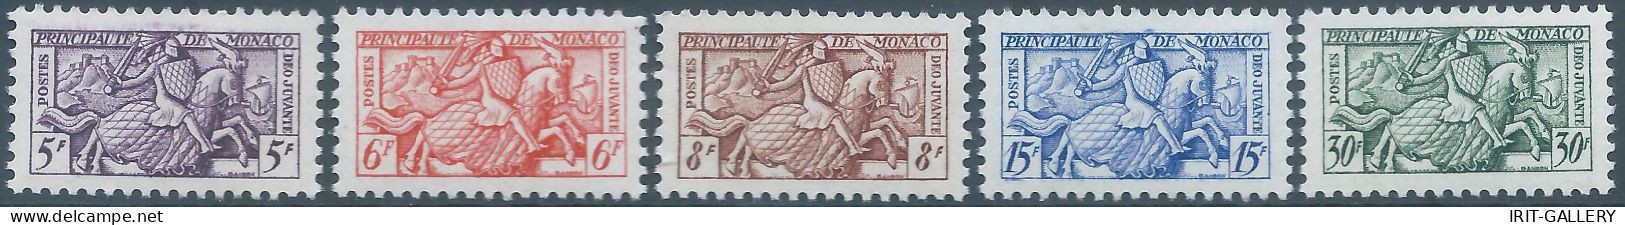 MONACO - MONK - MONTECARLO,1955 Stamps For Business Cards,5Fr-6Fr-8Fr-15Fr-30Fr,MNH - Ongebruikt